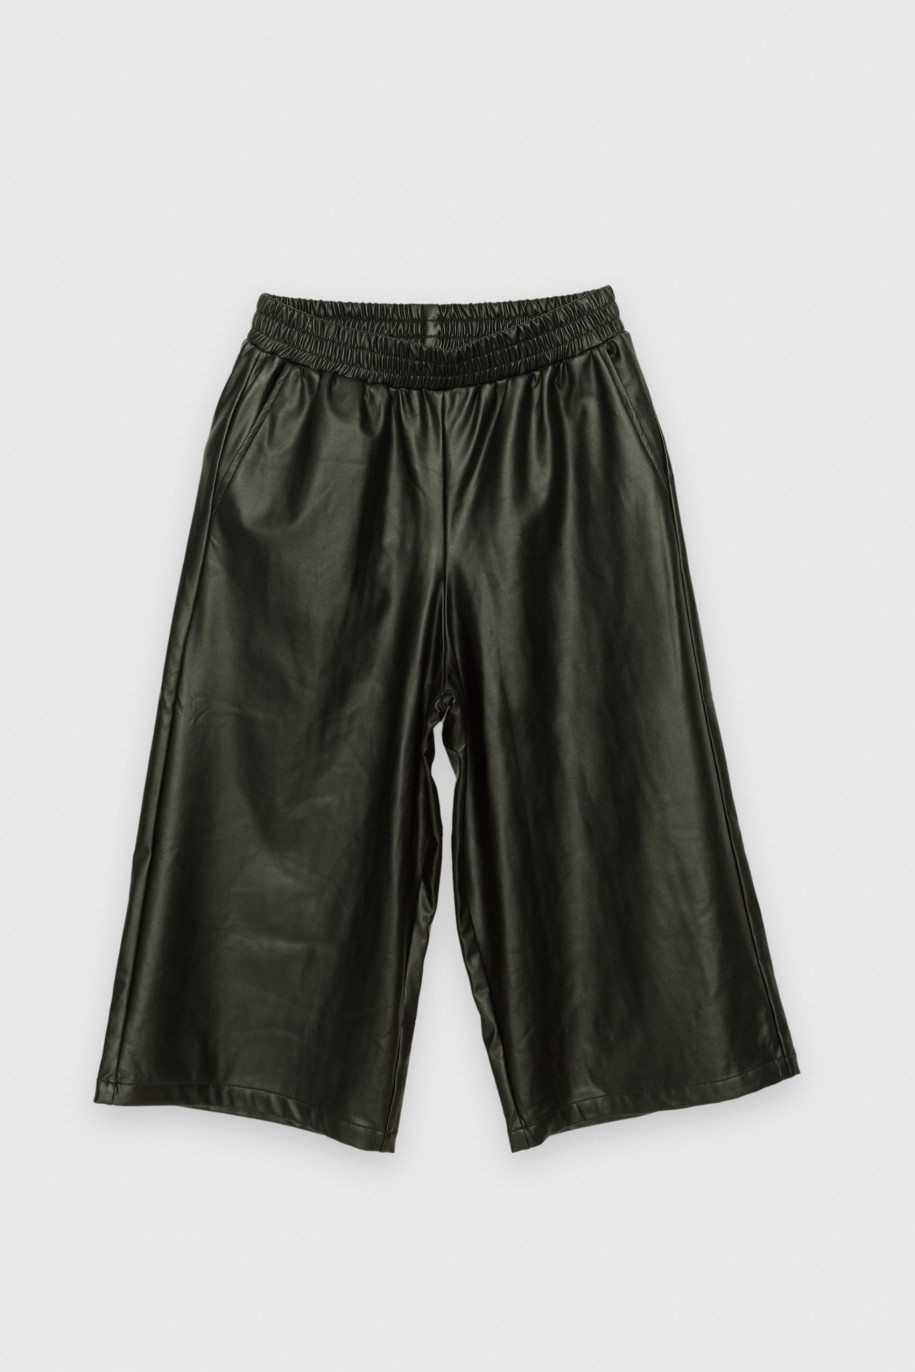 Czarne spodnie typu culotty ze sztucznej skóry - 36142